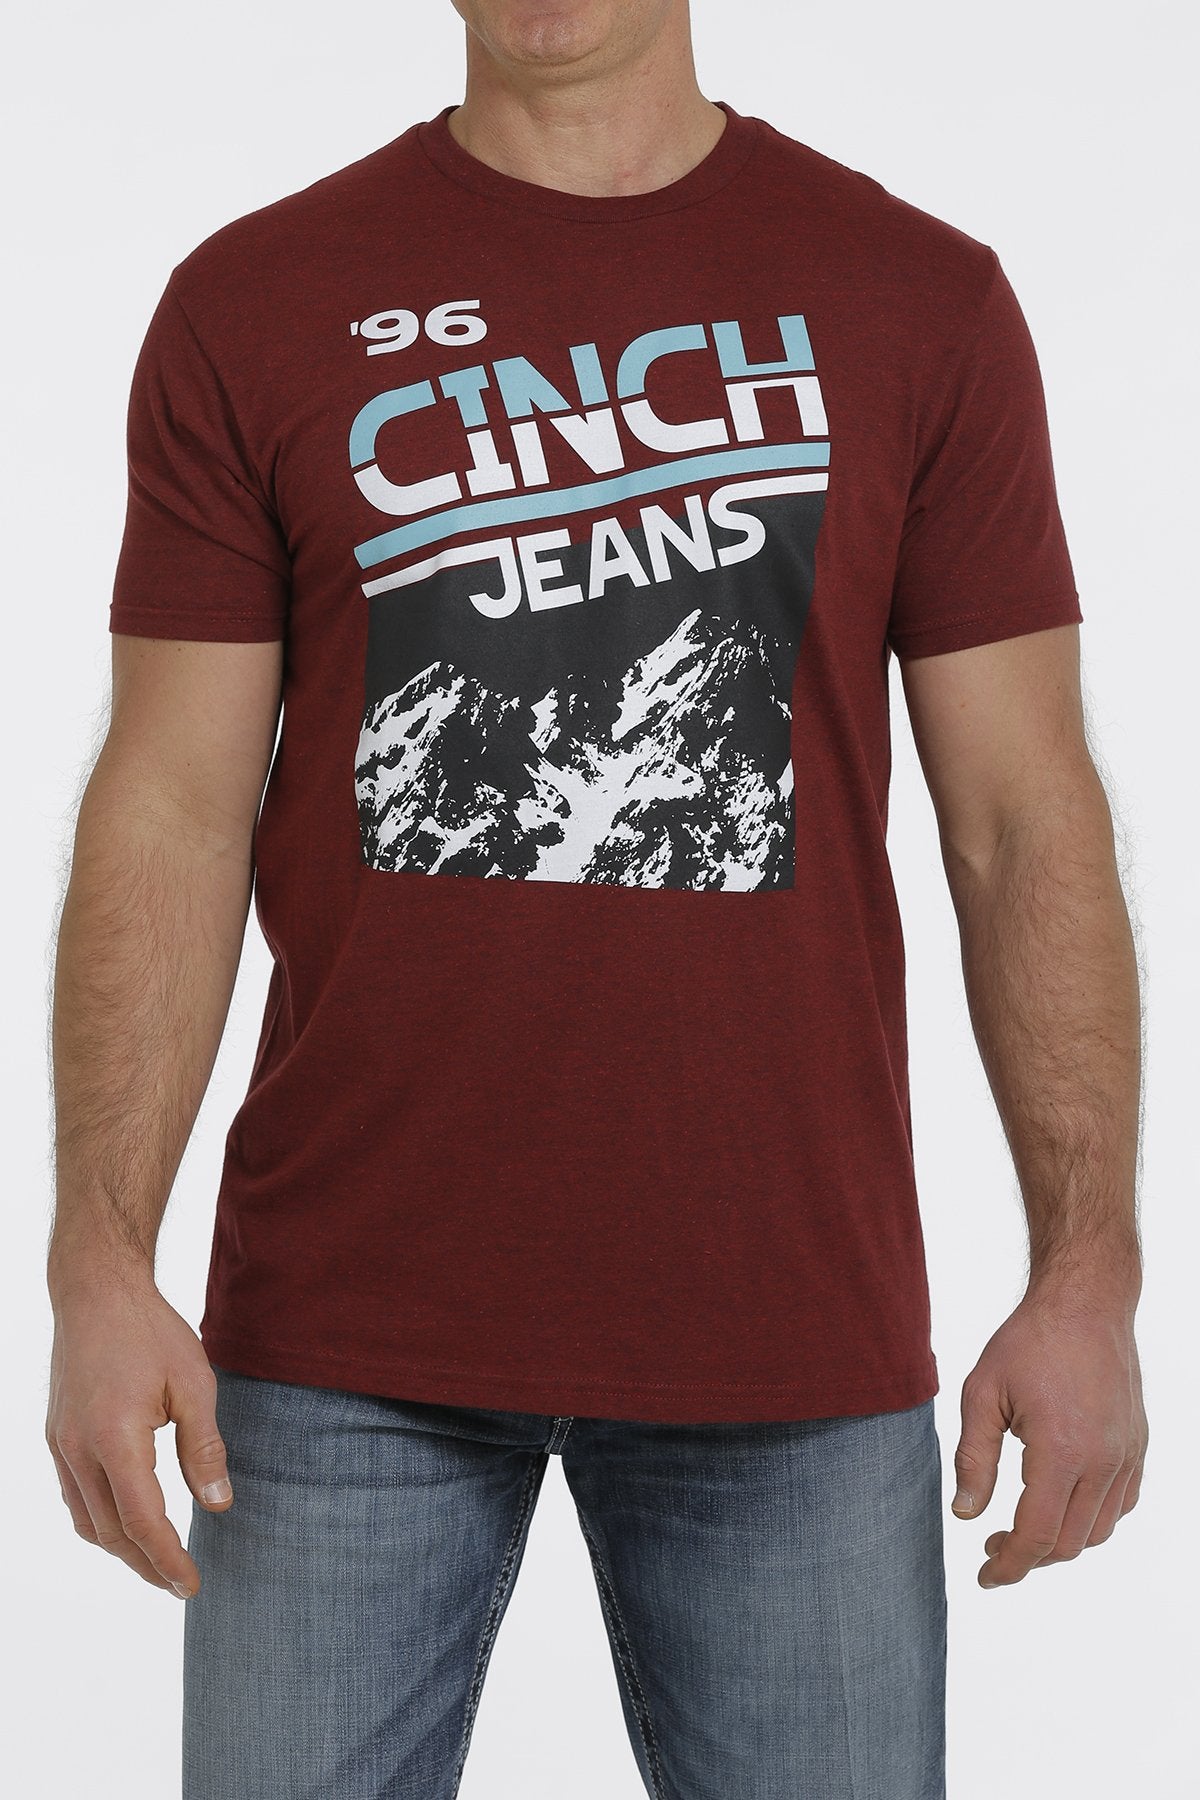 Cinch Jeans '96 Graphic T-Shirt